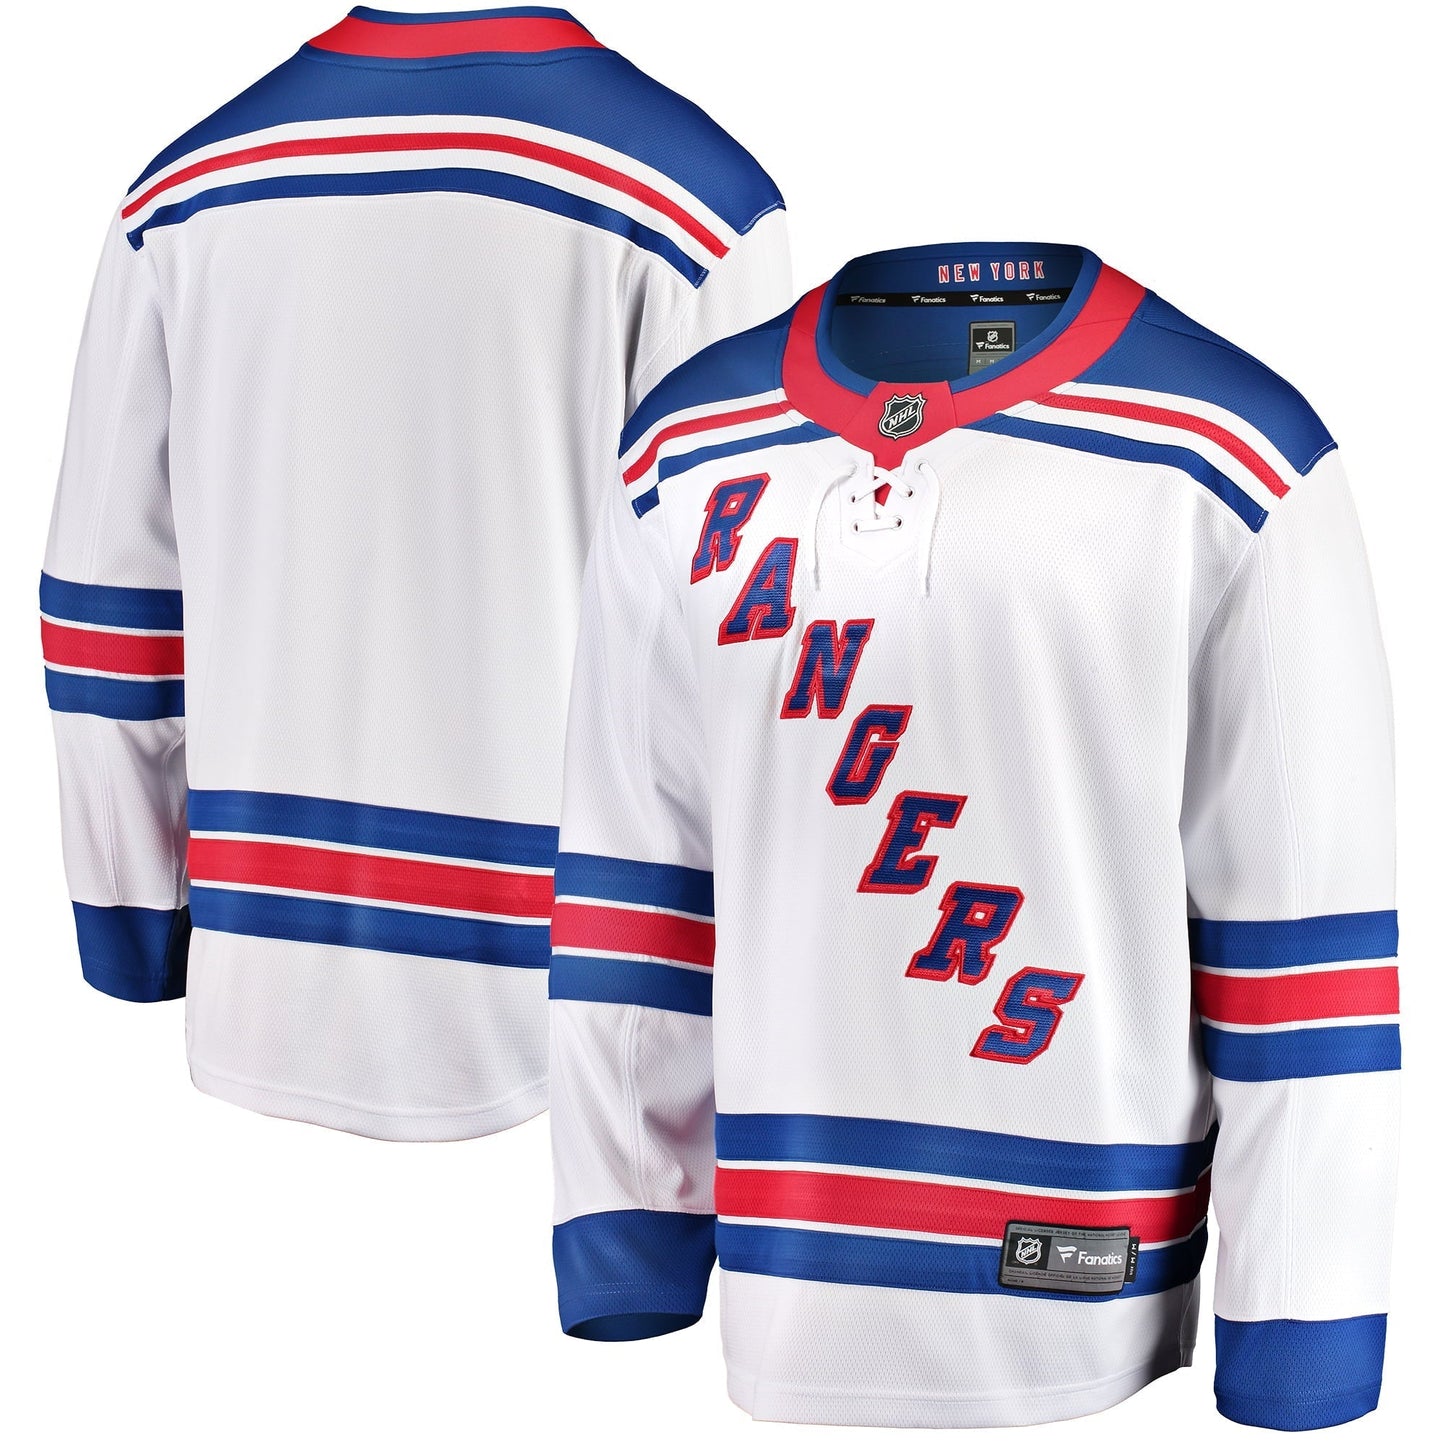 Men's Fanatics Branded White New York Rangers Breakaway Away Jersey